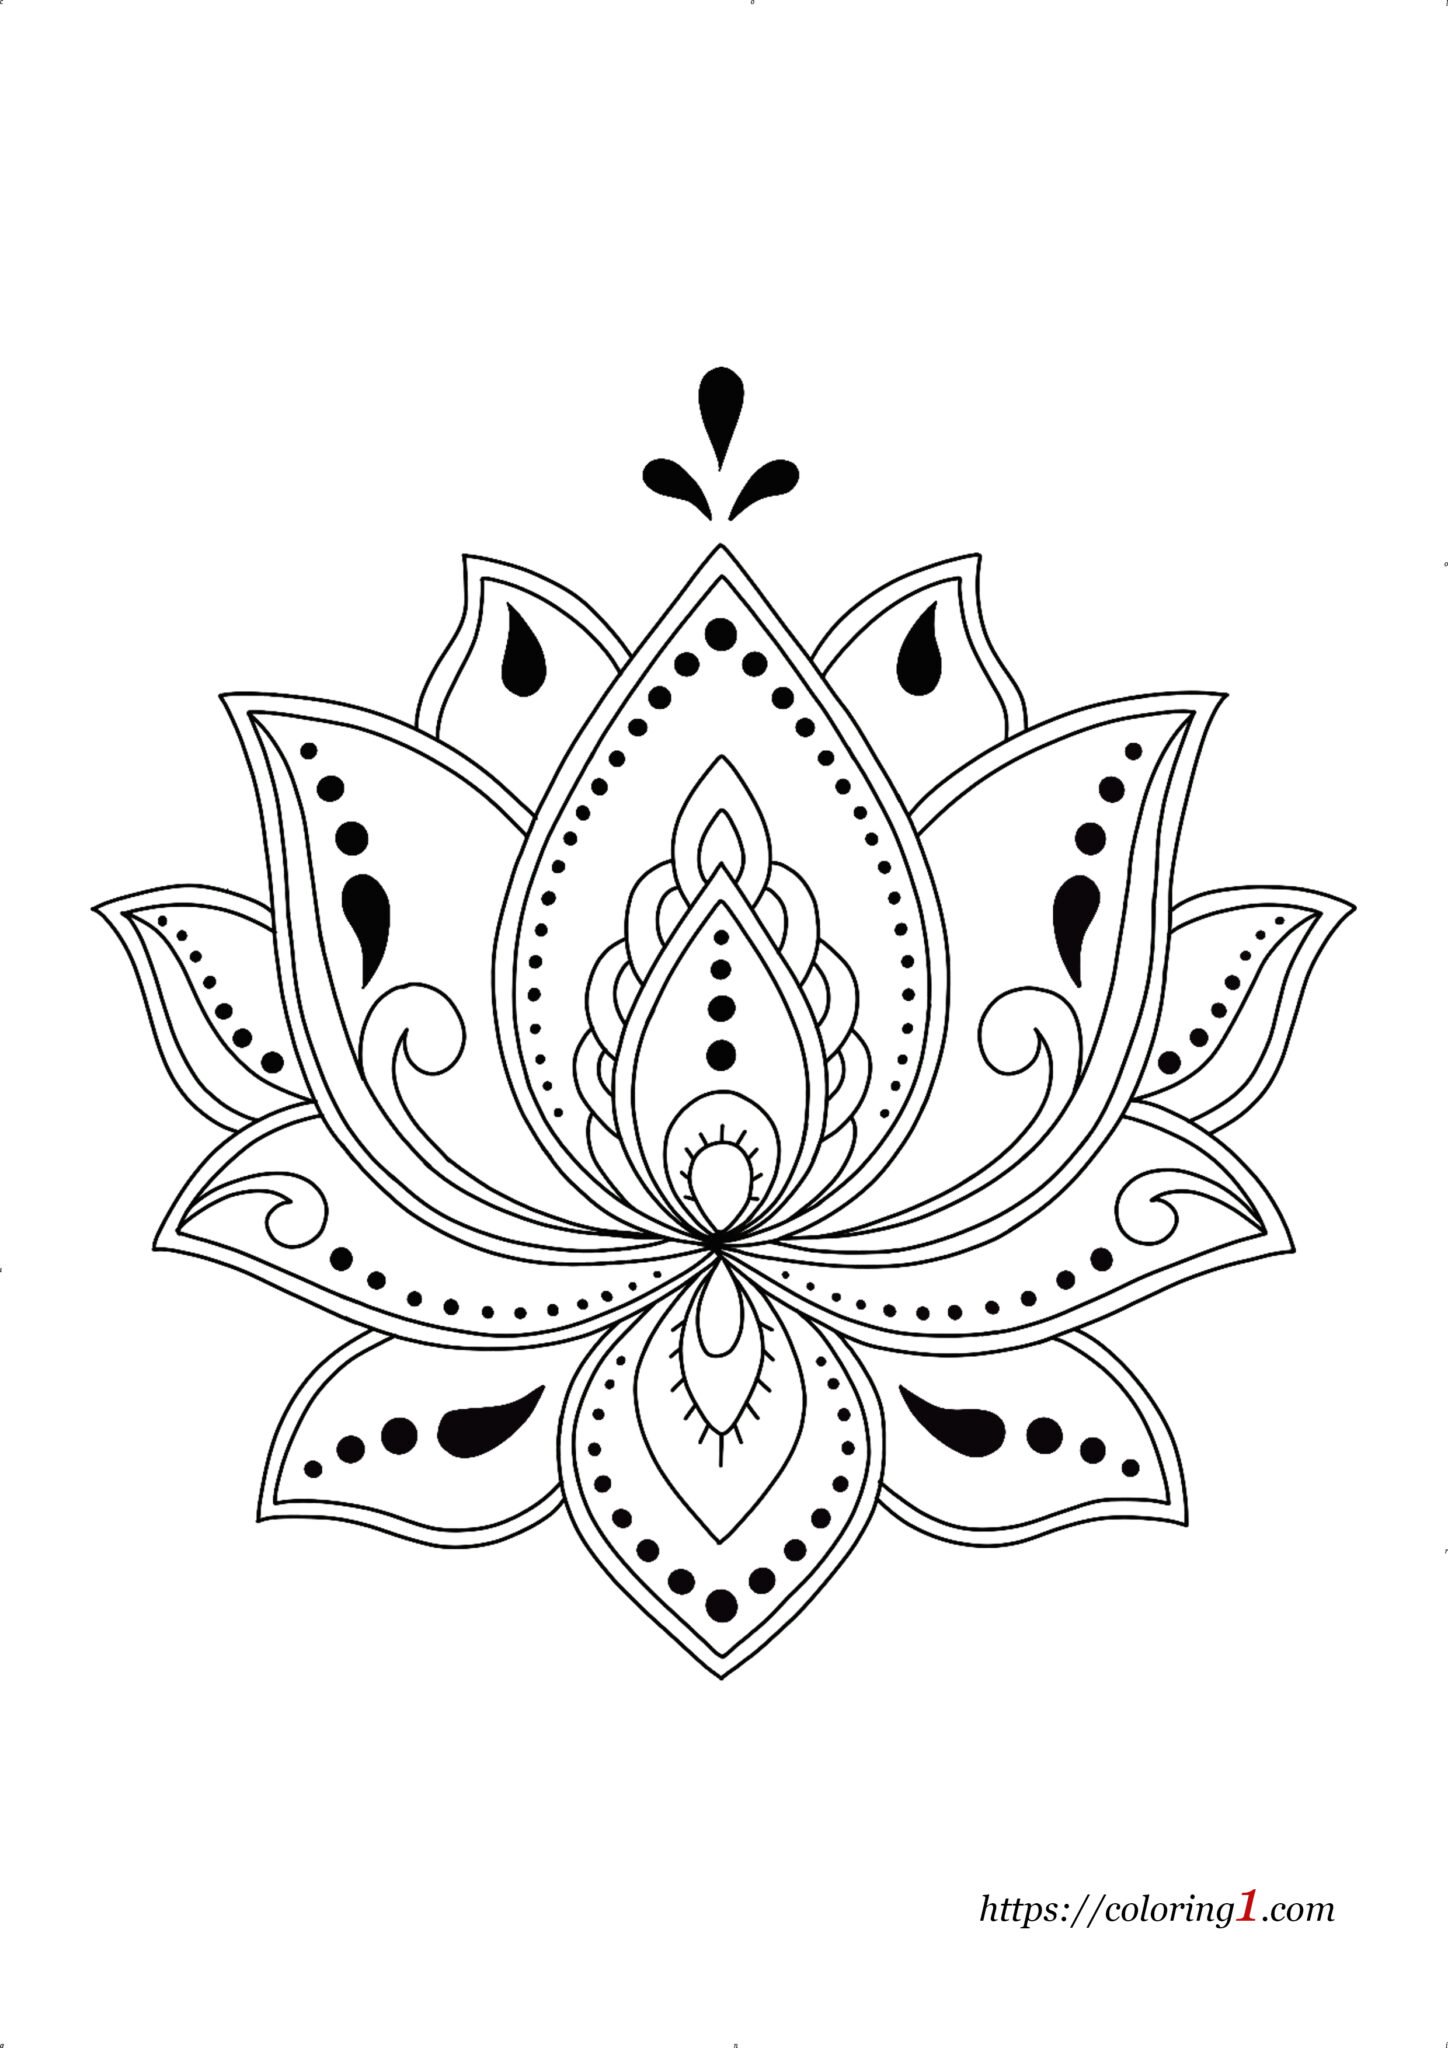 Lotus Flower Mandala Coloring Pages 2 Free Coloring Sheets (2021)